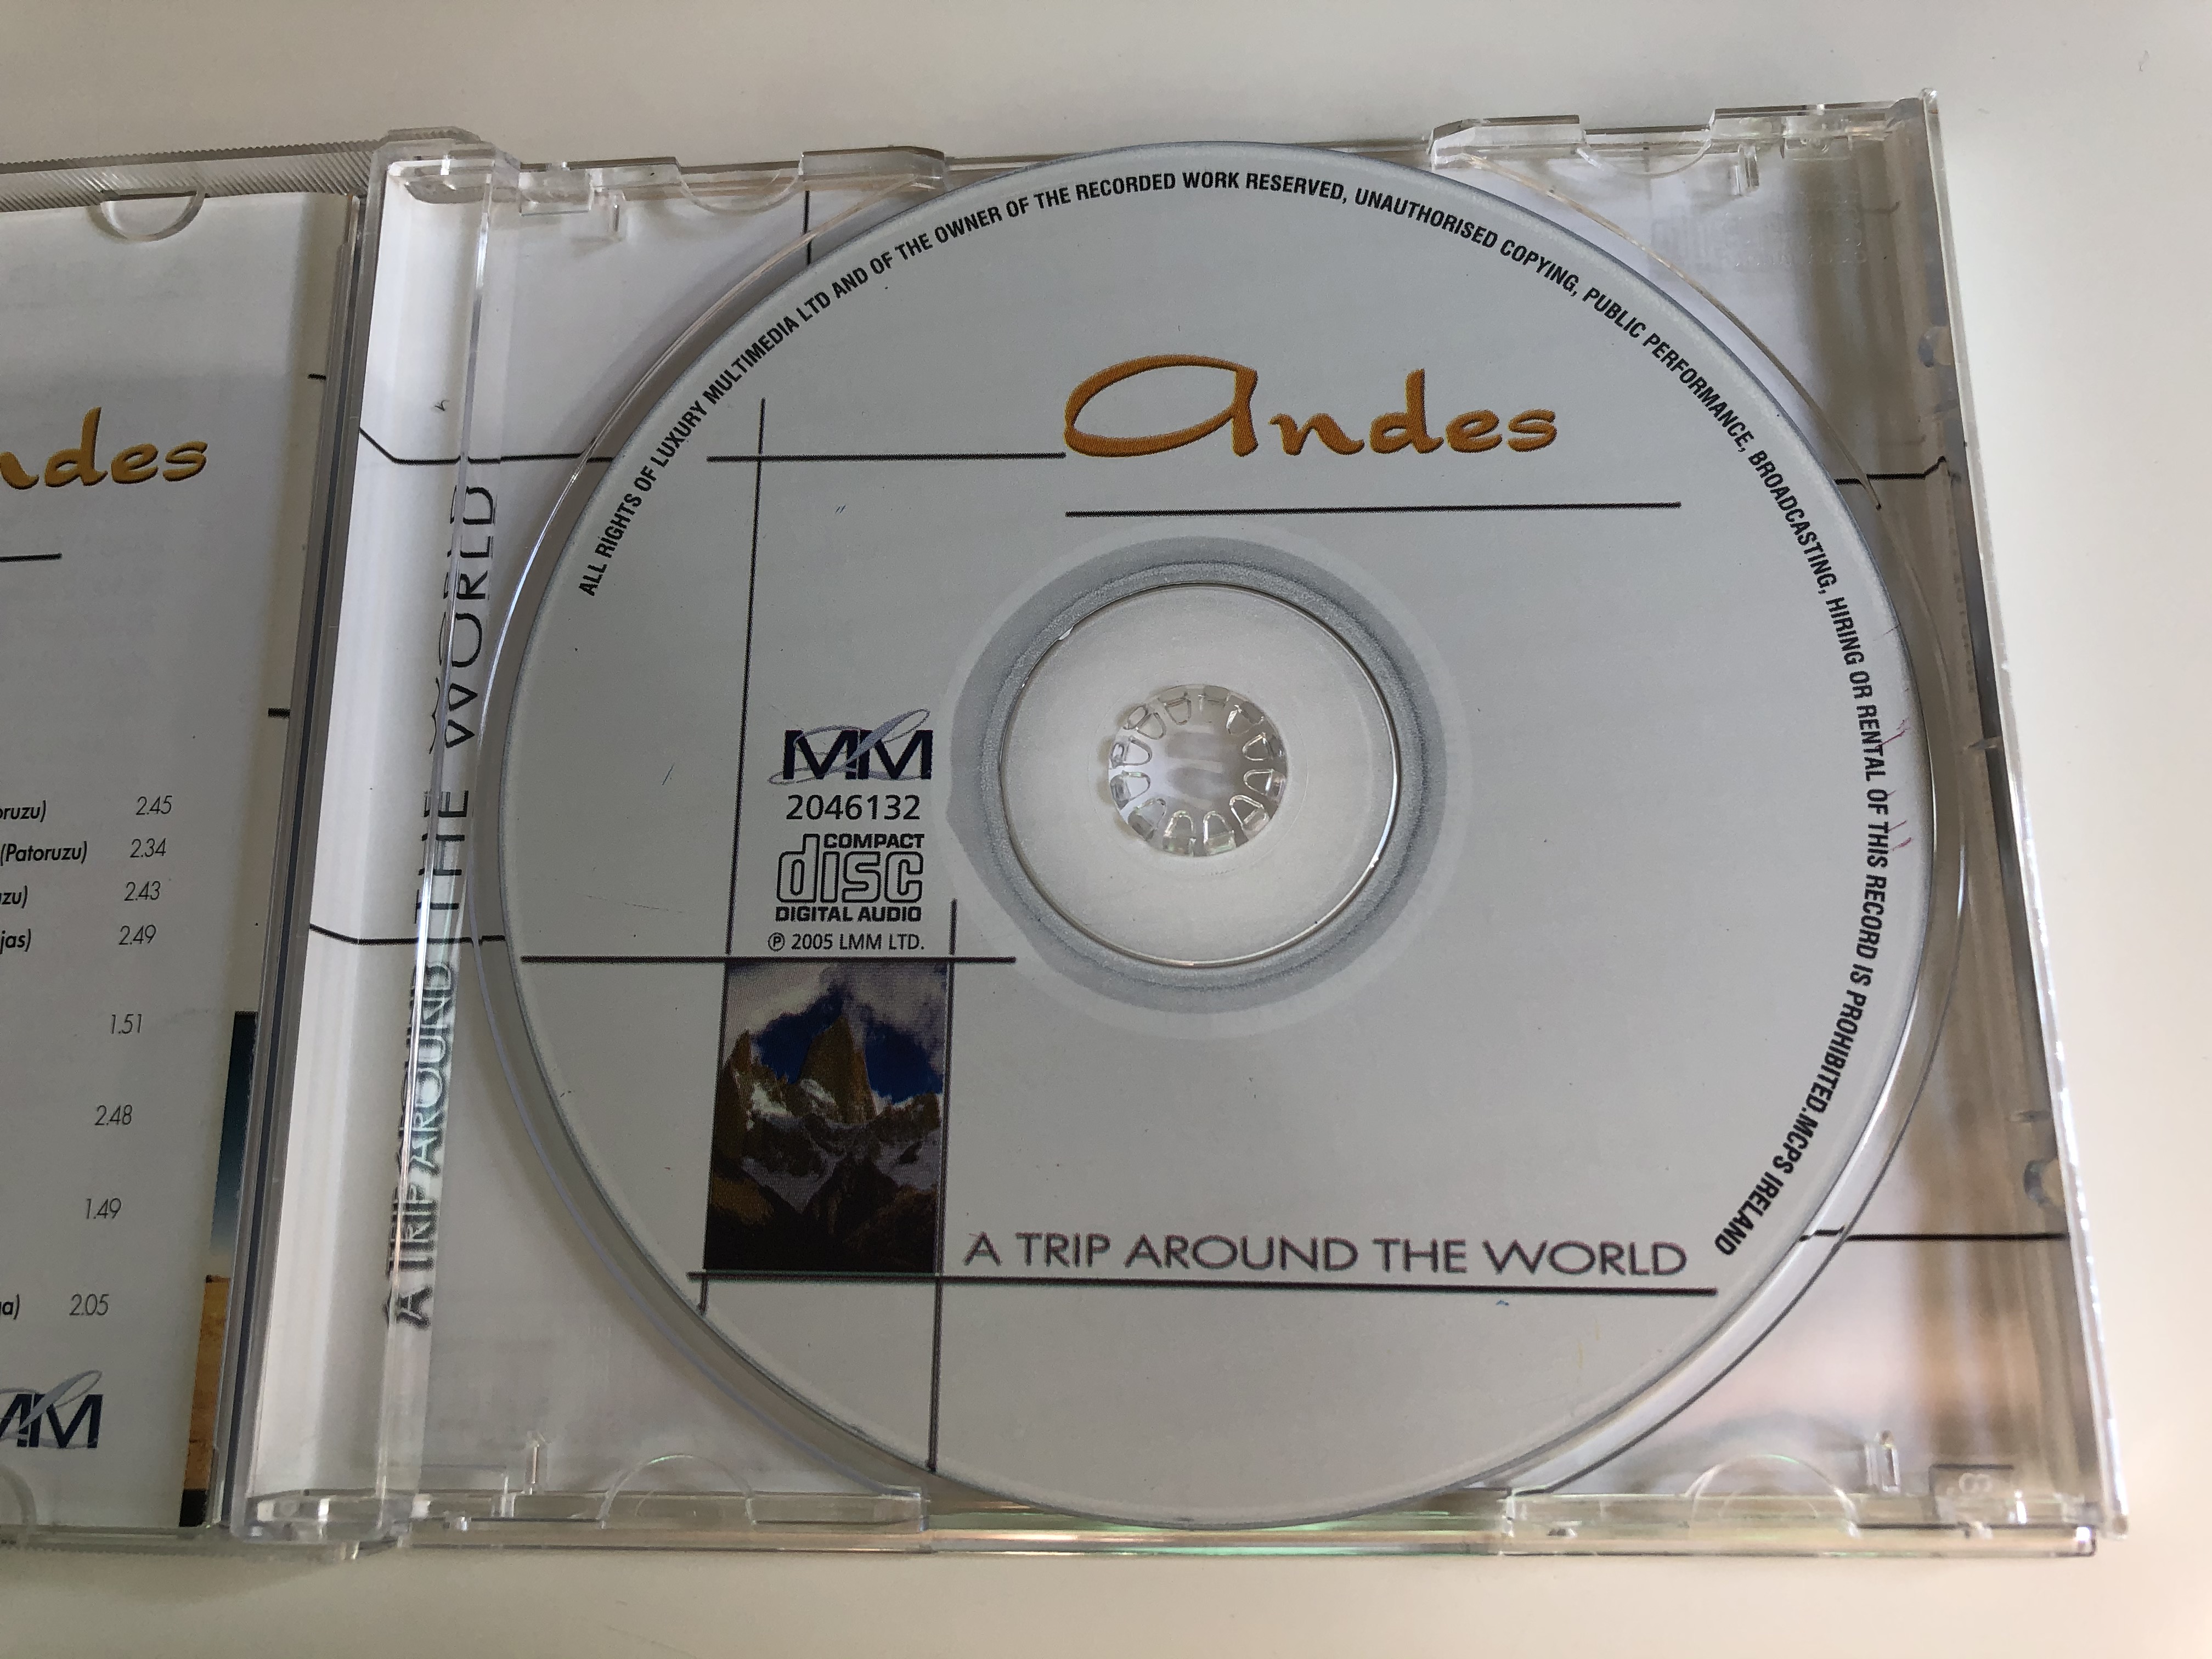 andes-a-trip-around-the-world-lmm-audio-cd-2005-2046132-3-.jpg